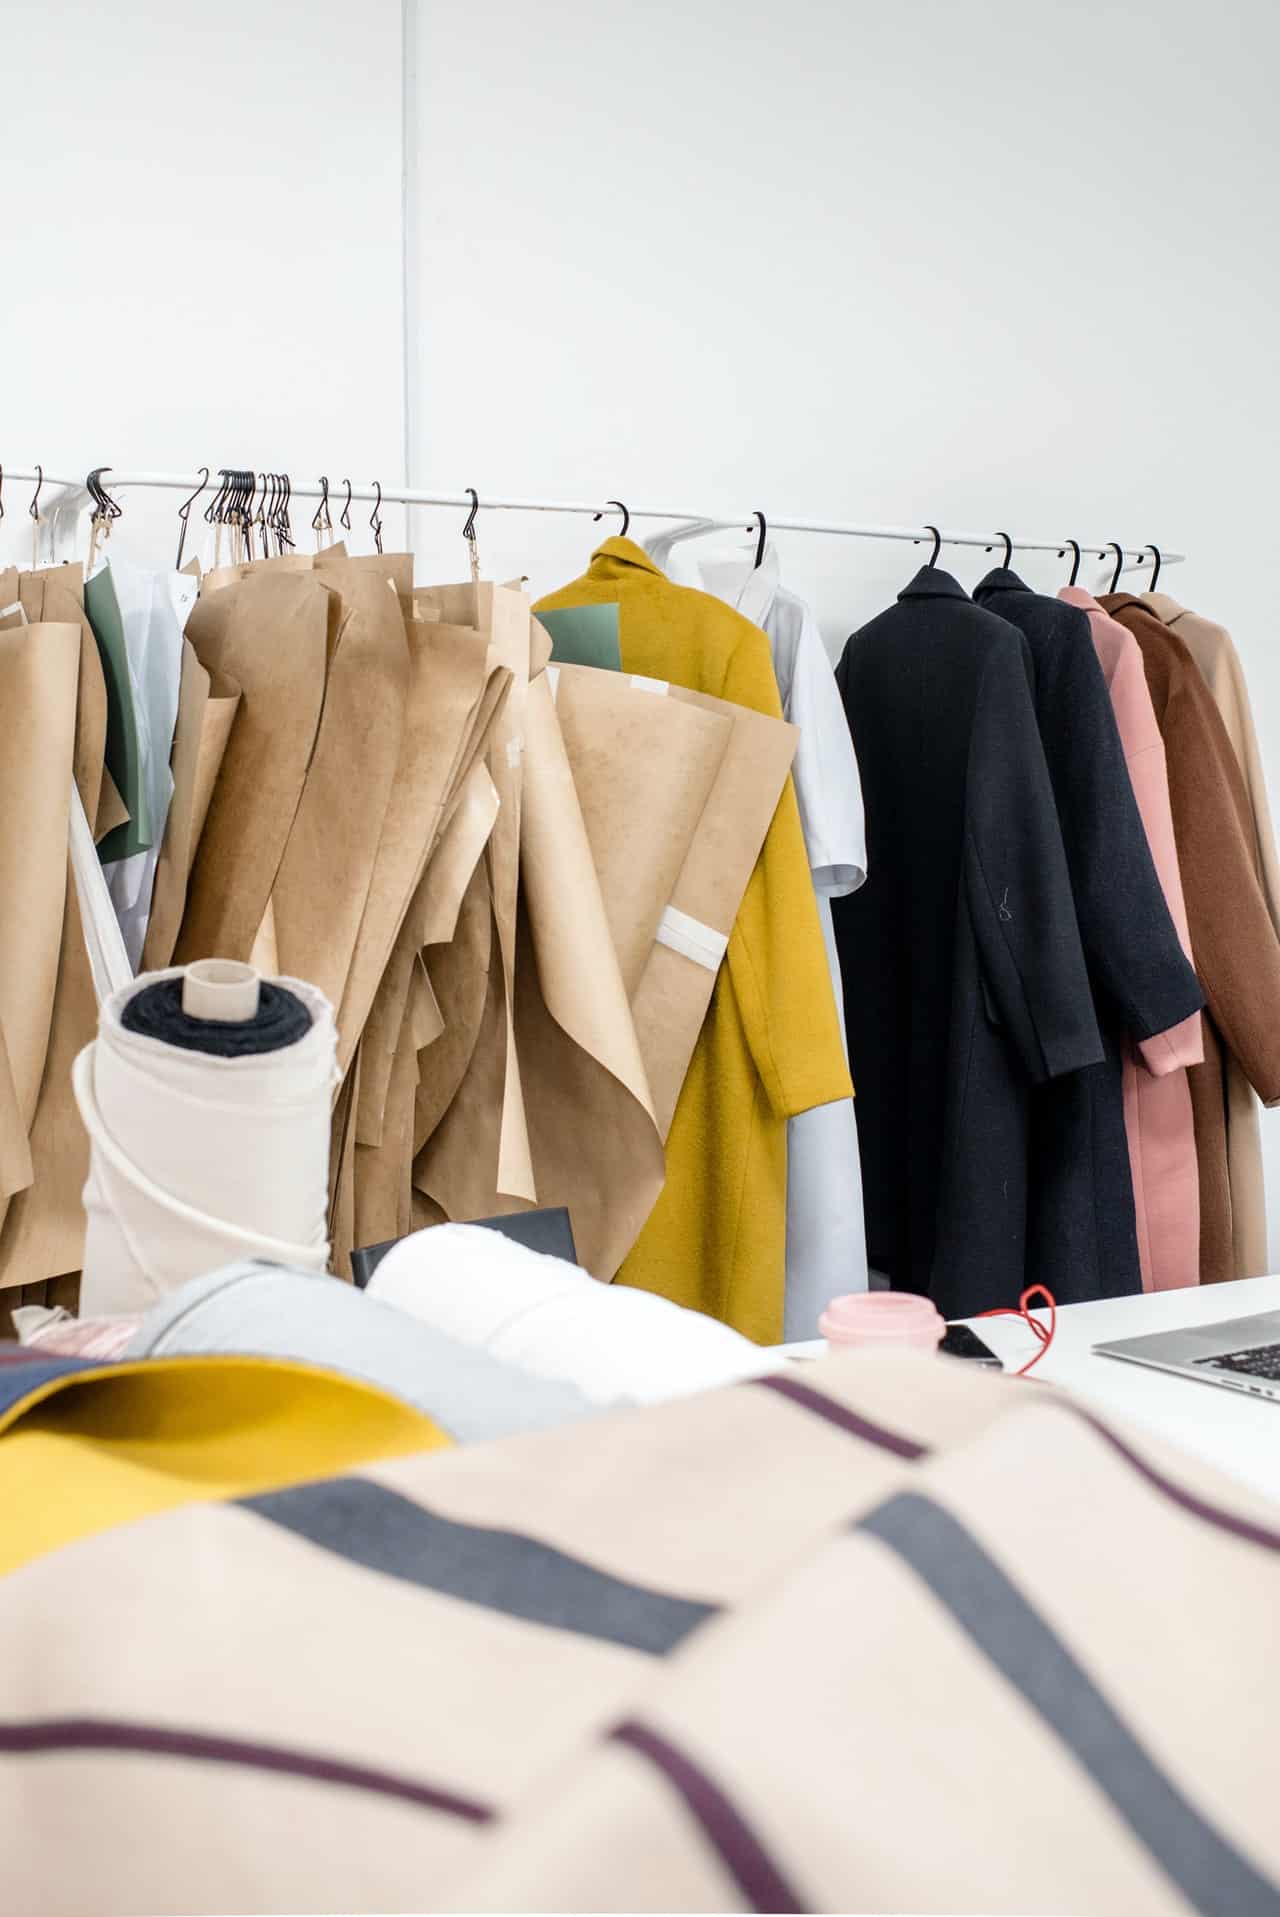 These fabrics are already revolutionizing the fashion industry